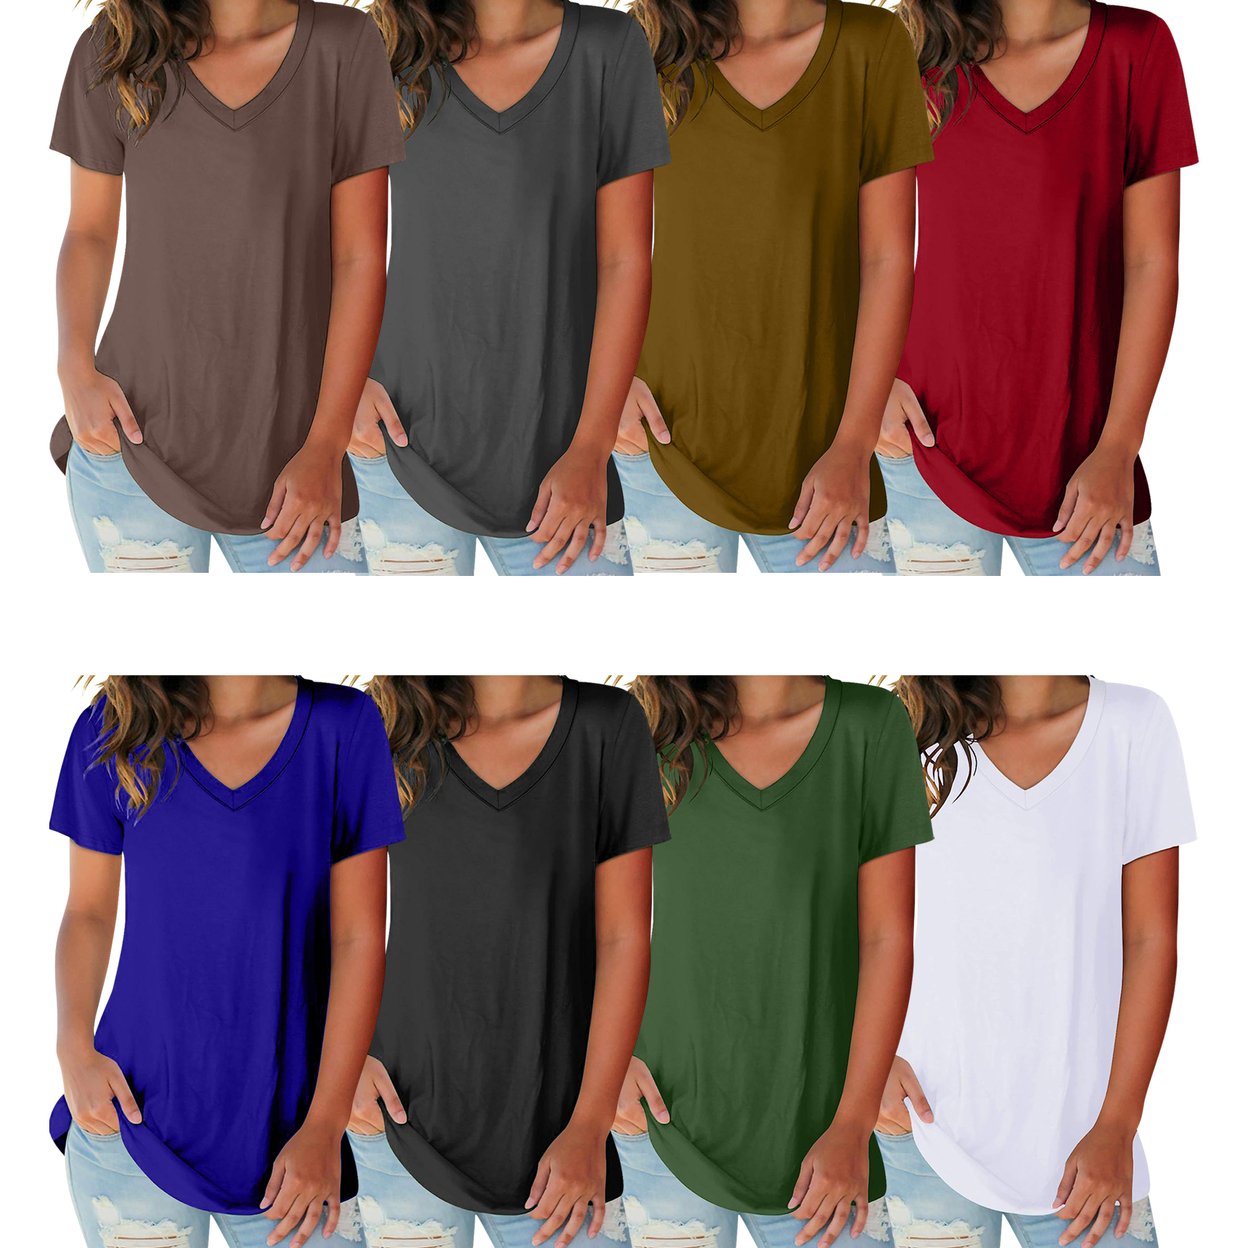 Women's Ultra-Soft Smooth Cotton Blend Basic V-Neck Short Sleeve Shirts - Black, Xx-large